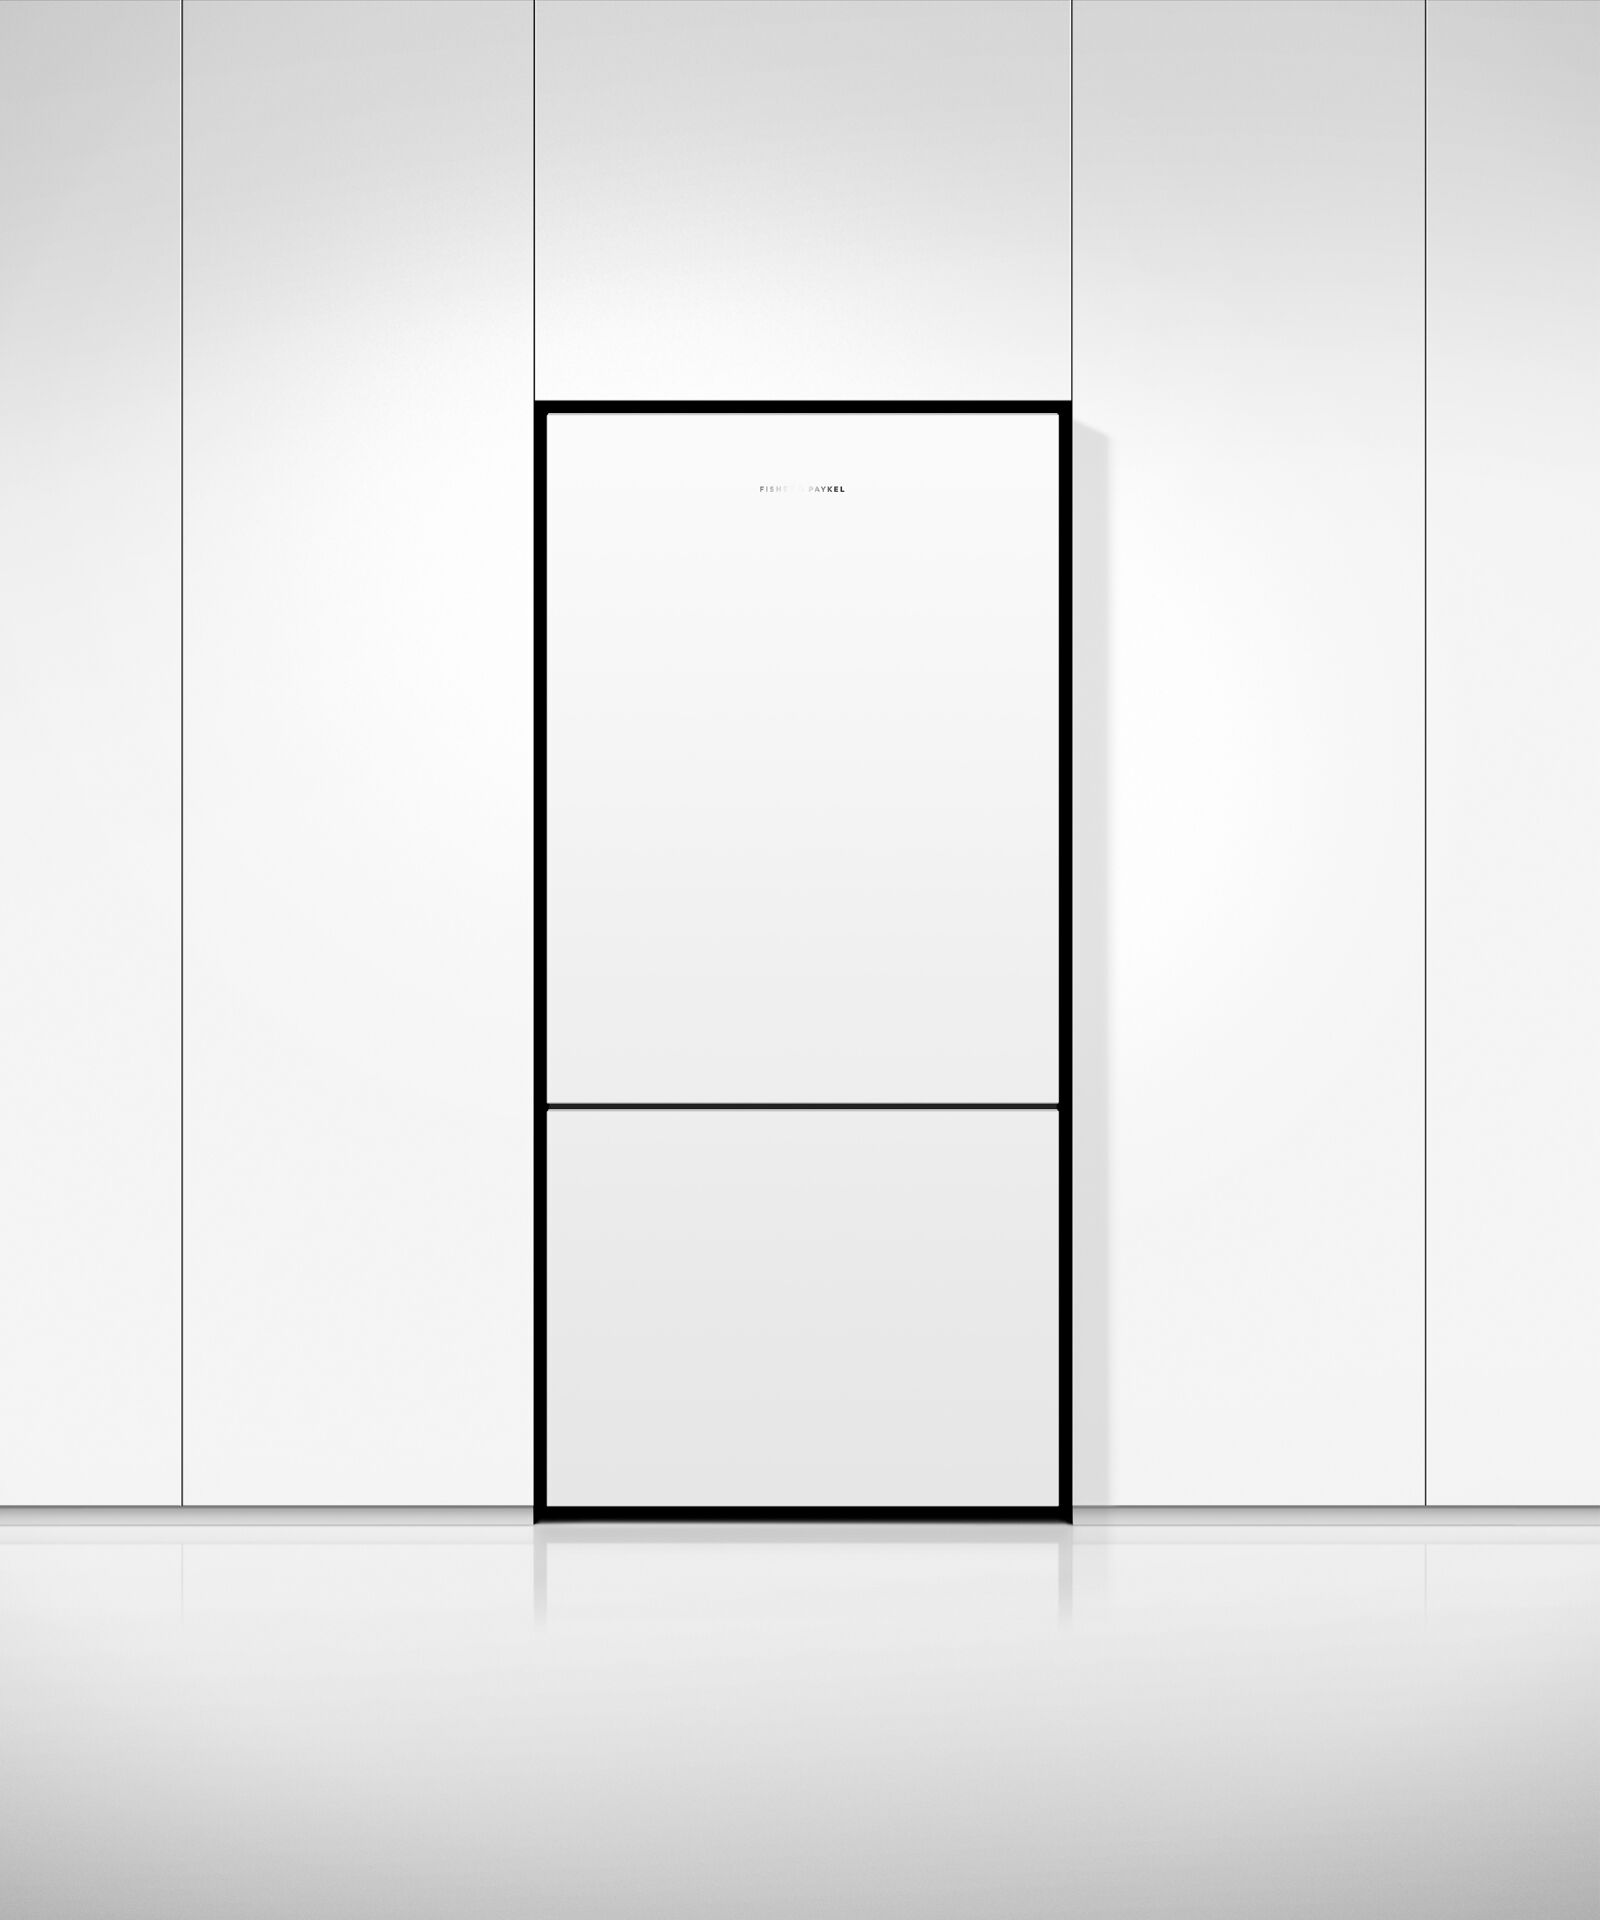 獨立式雪櫃冷凍櫃, 79cm  gallery image 4.0